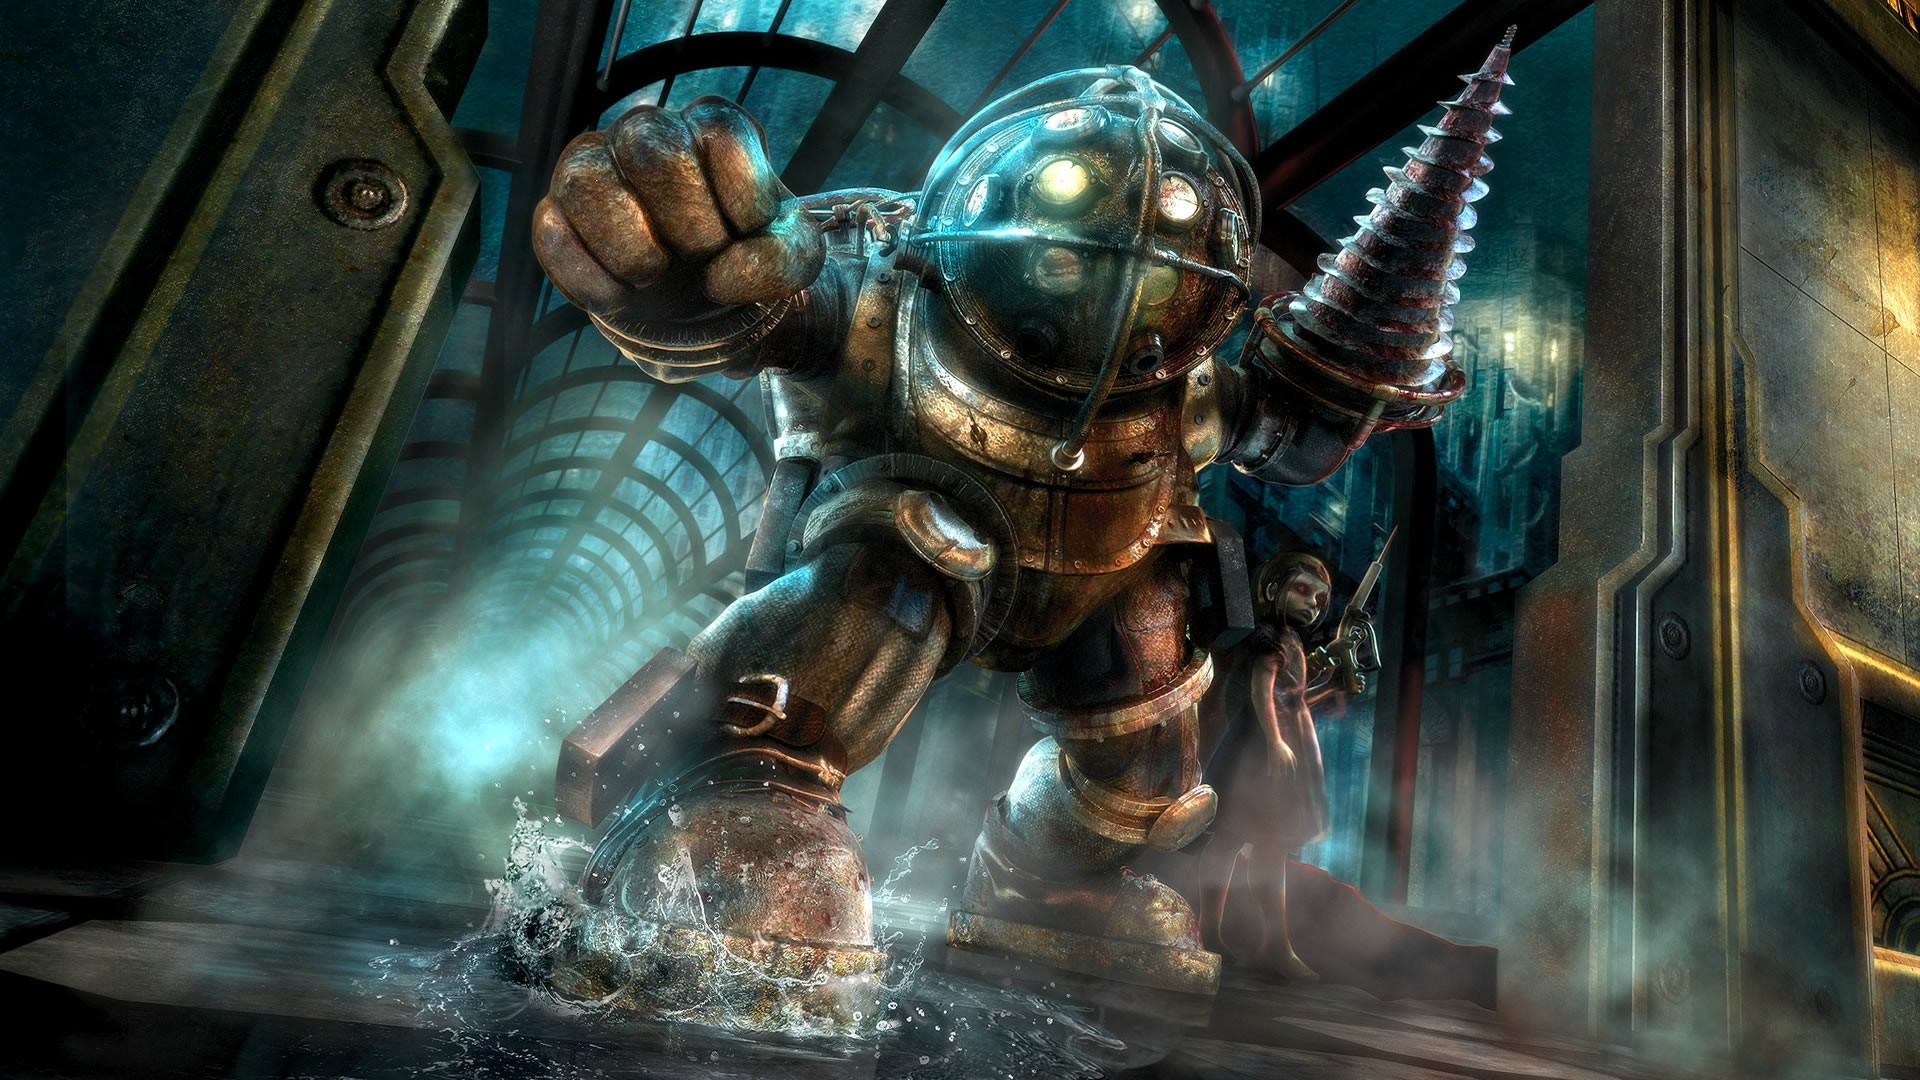 BioShock Infinite: Burial at Sea Episode 1 – Launch Trailer